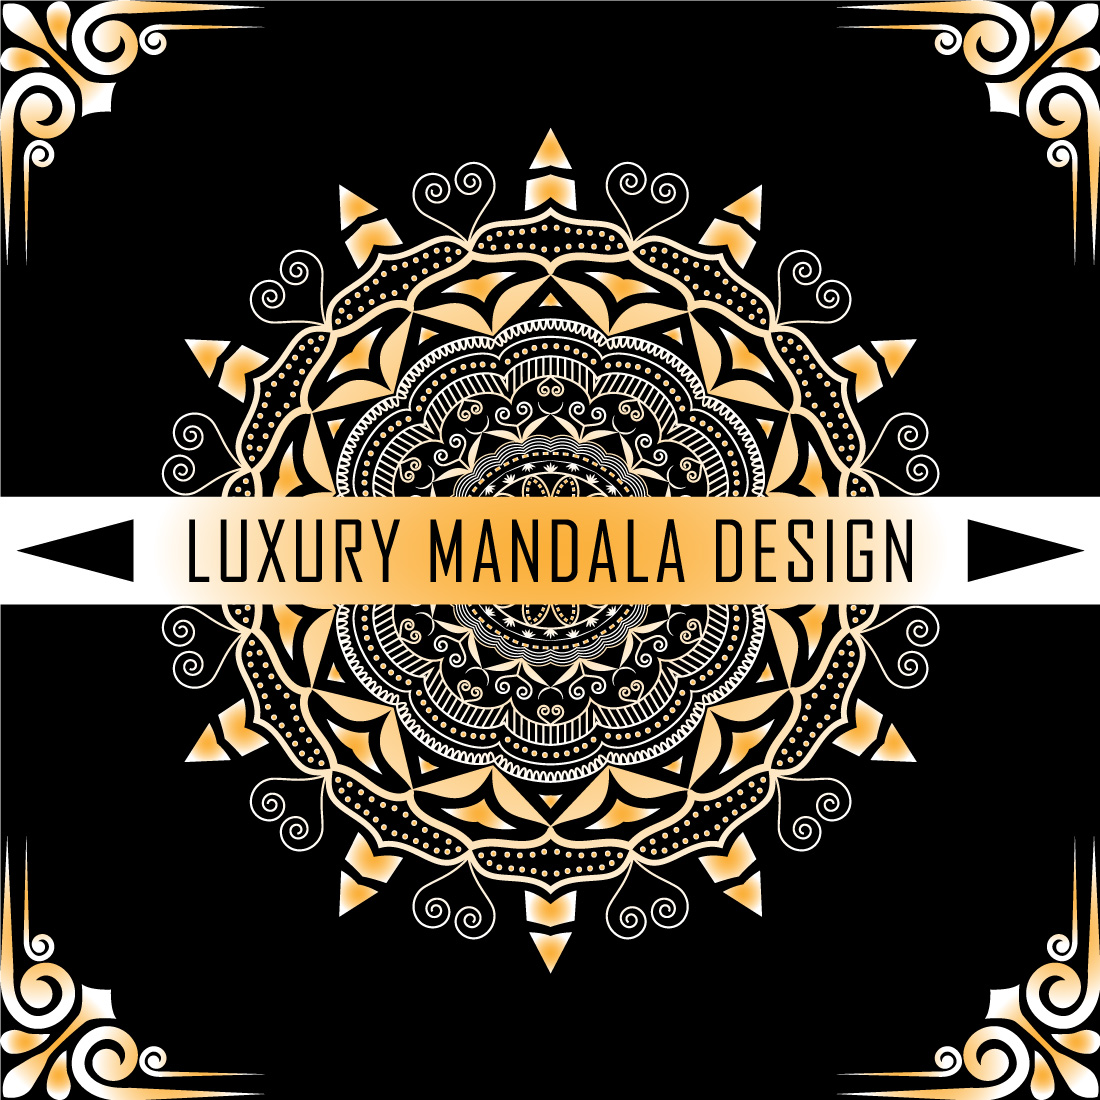 02 Luxury Mandala Design preview image.